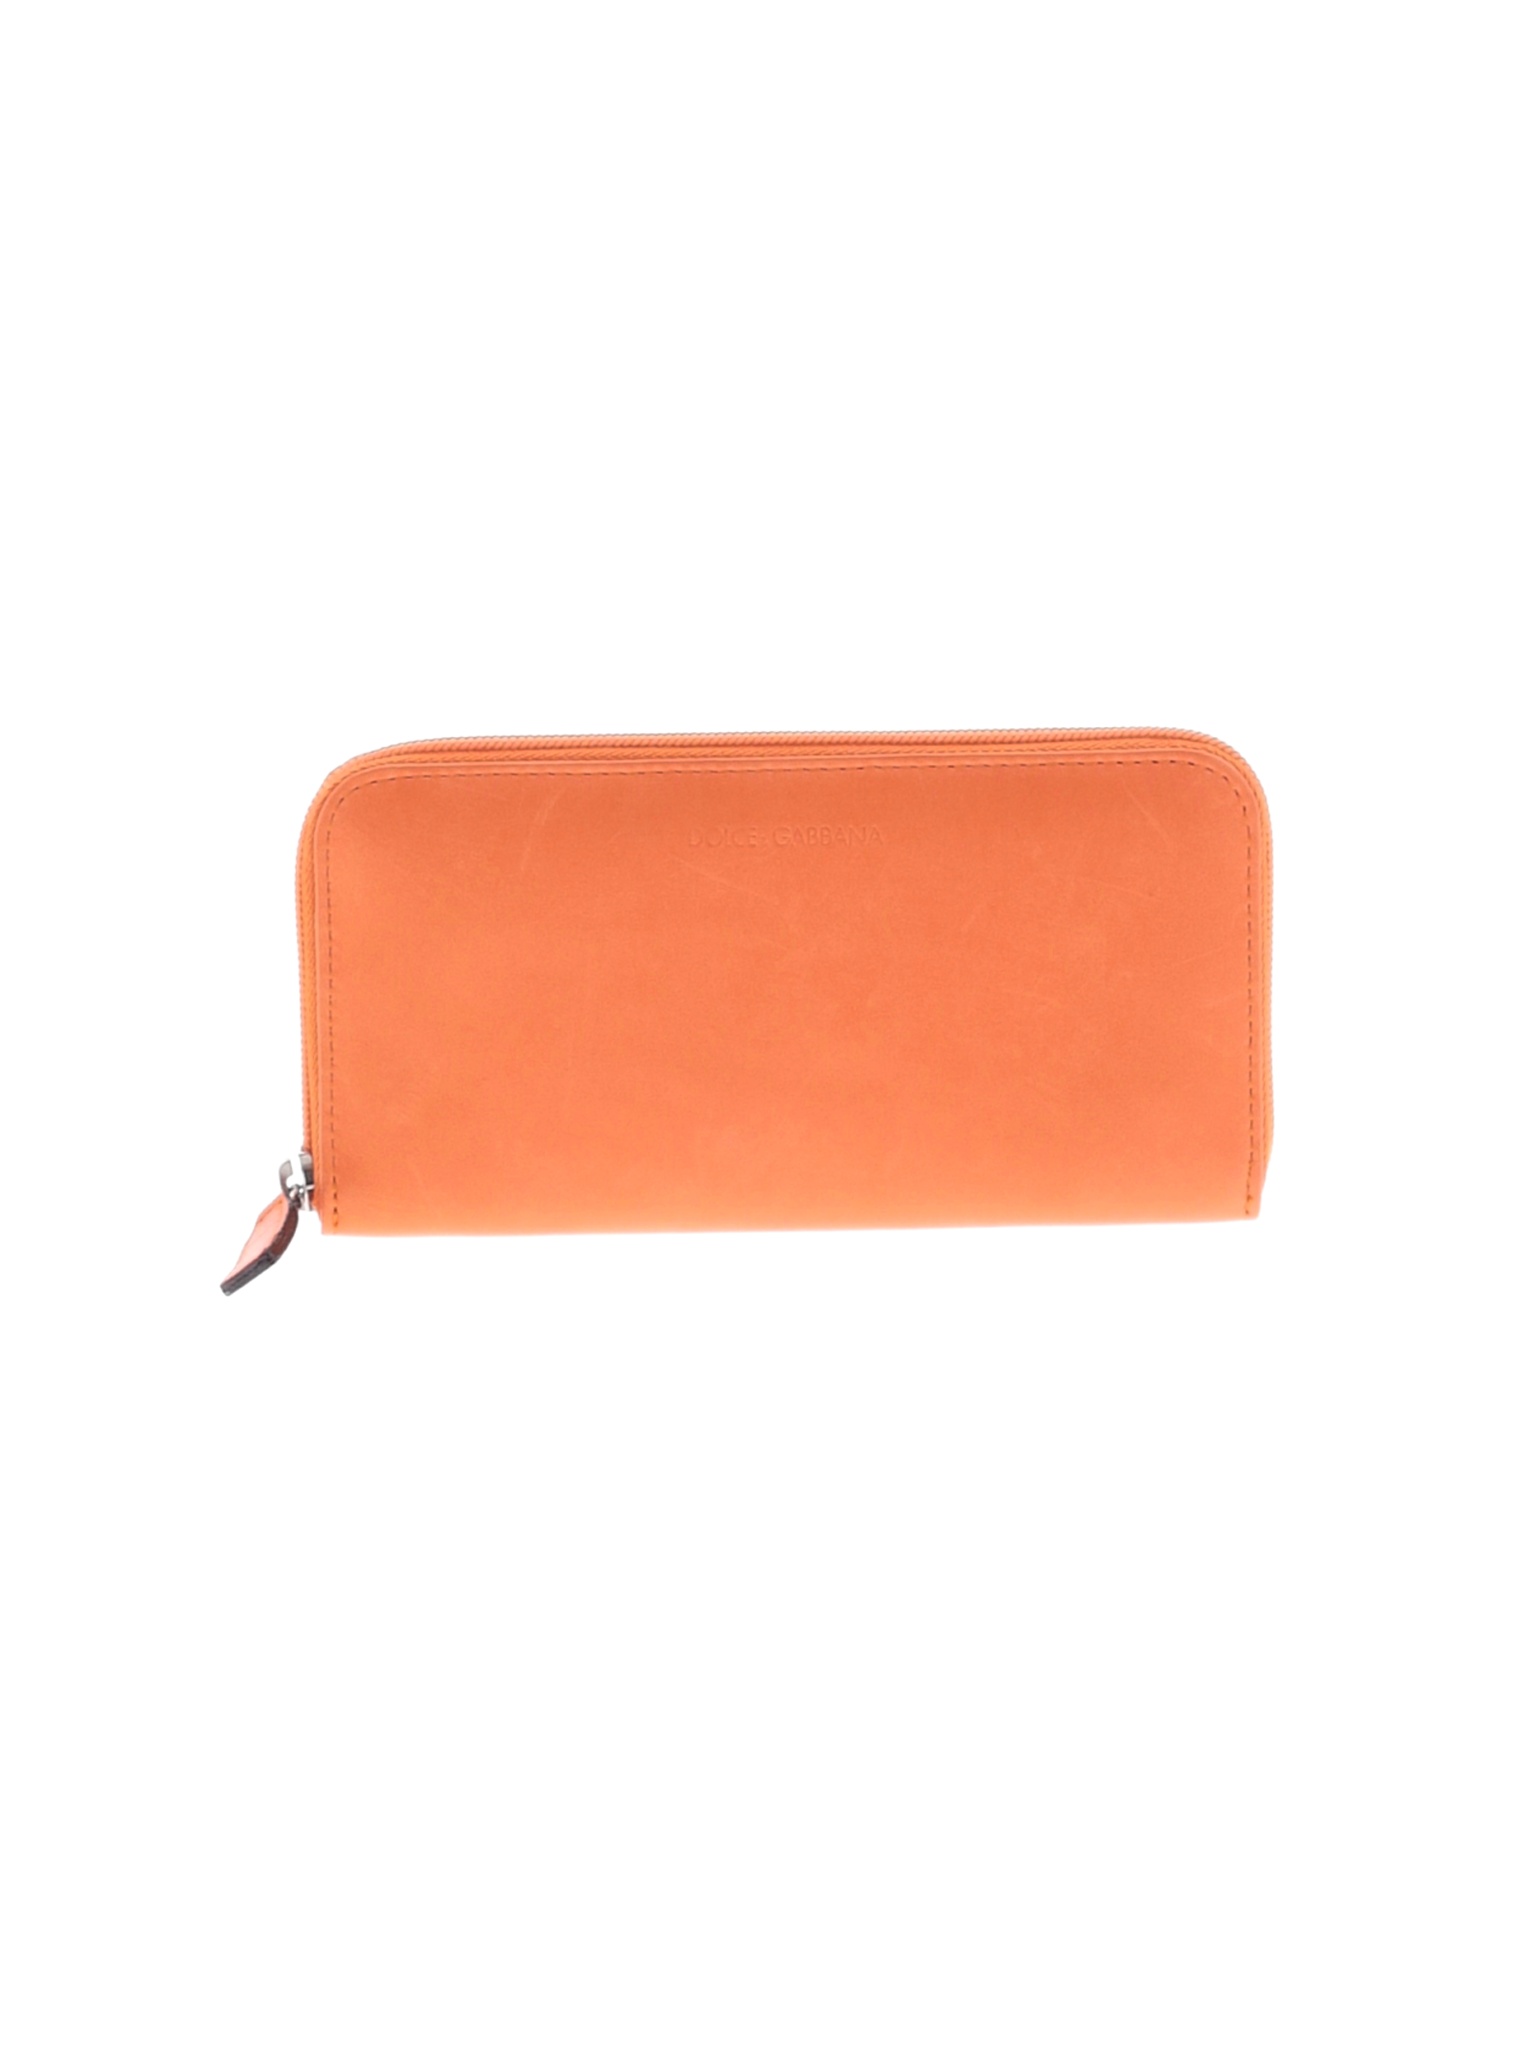 Dolce & Gabbana Women Orange Leather Wallet One Size | eBay